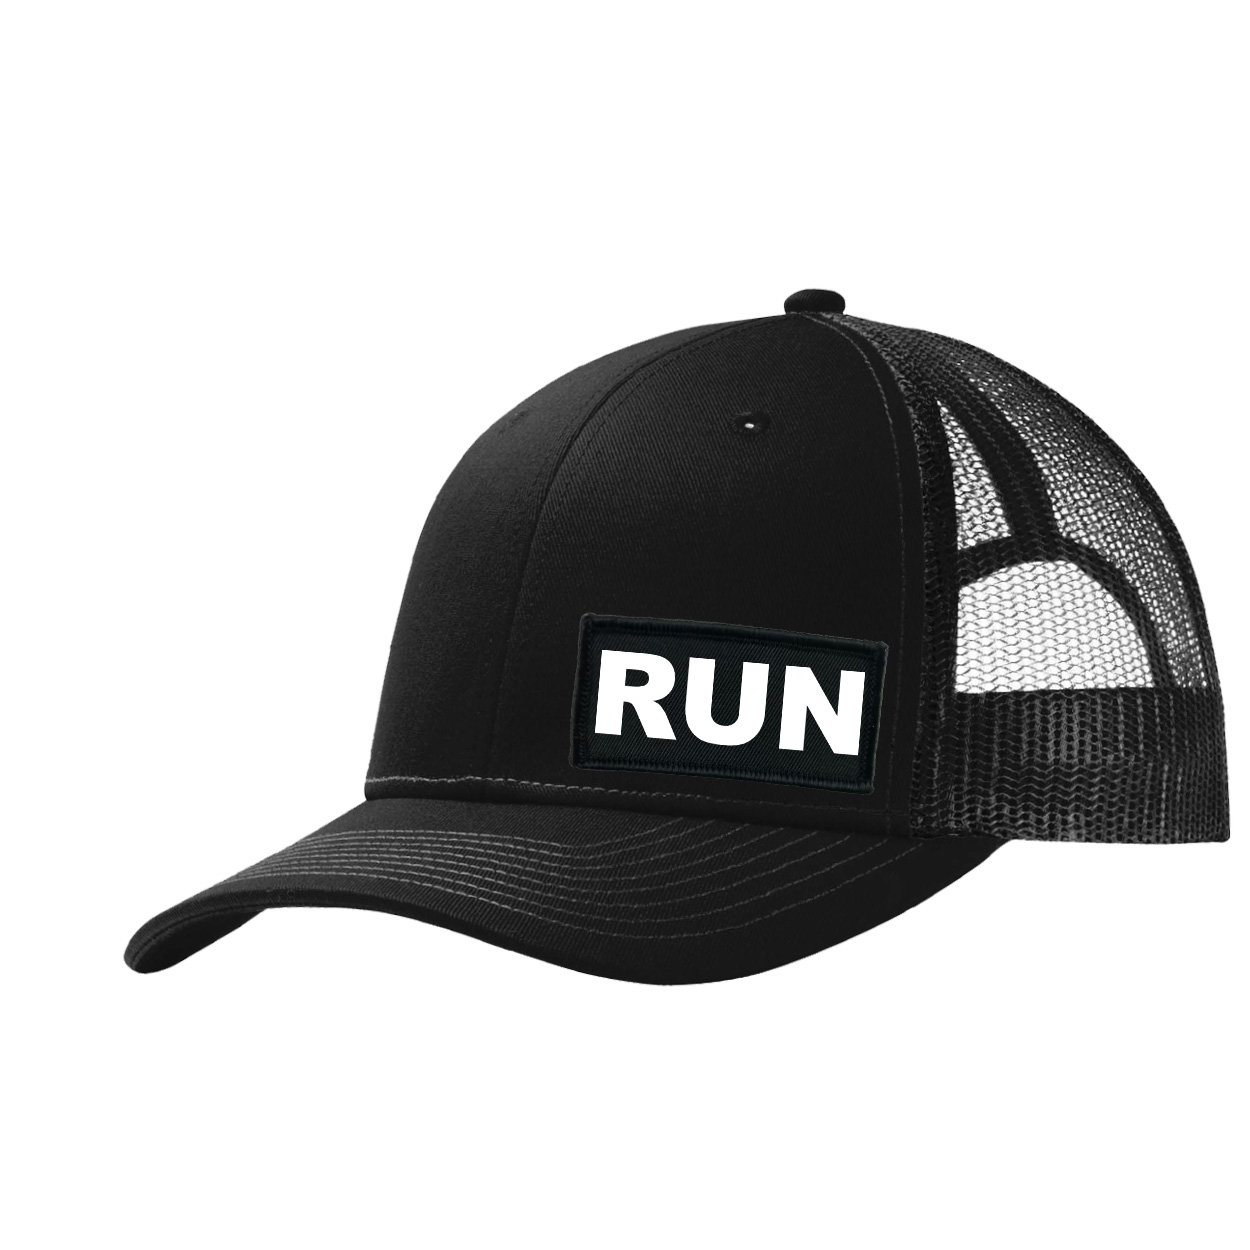 Run Brand Logo Night Out Woven Patch Snapback Trucker Hat Black